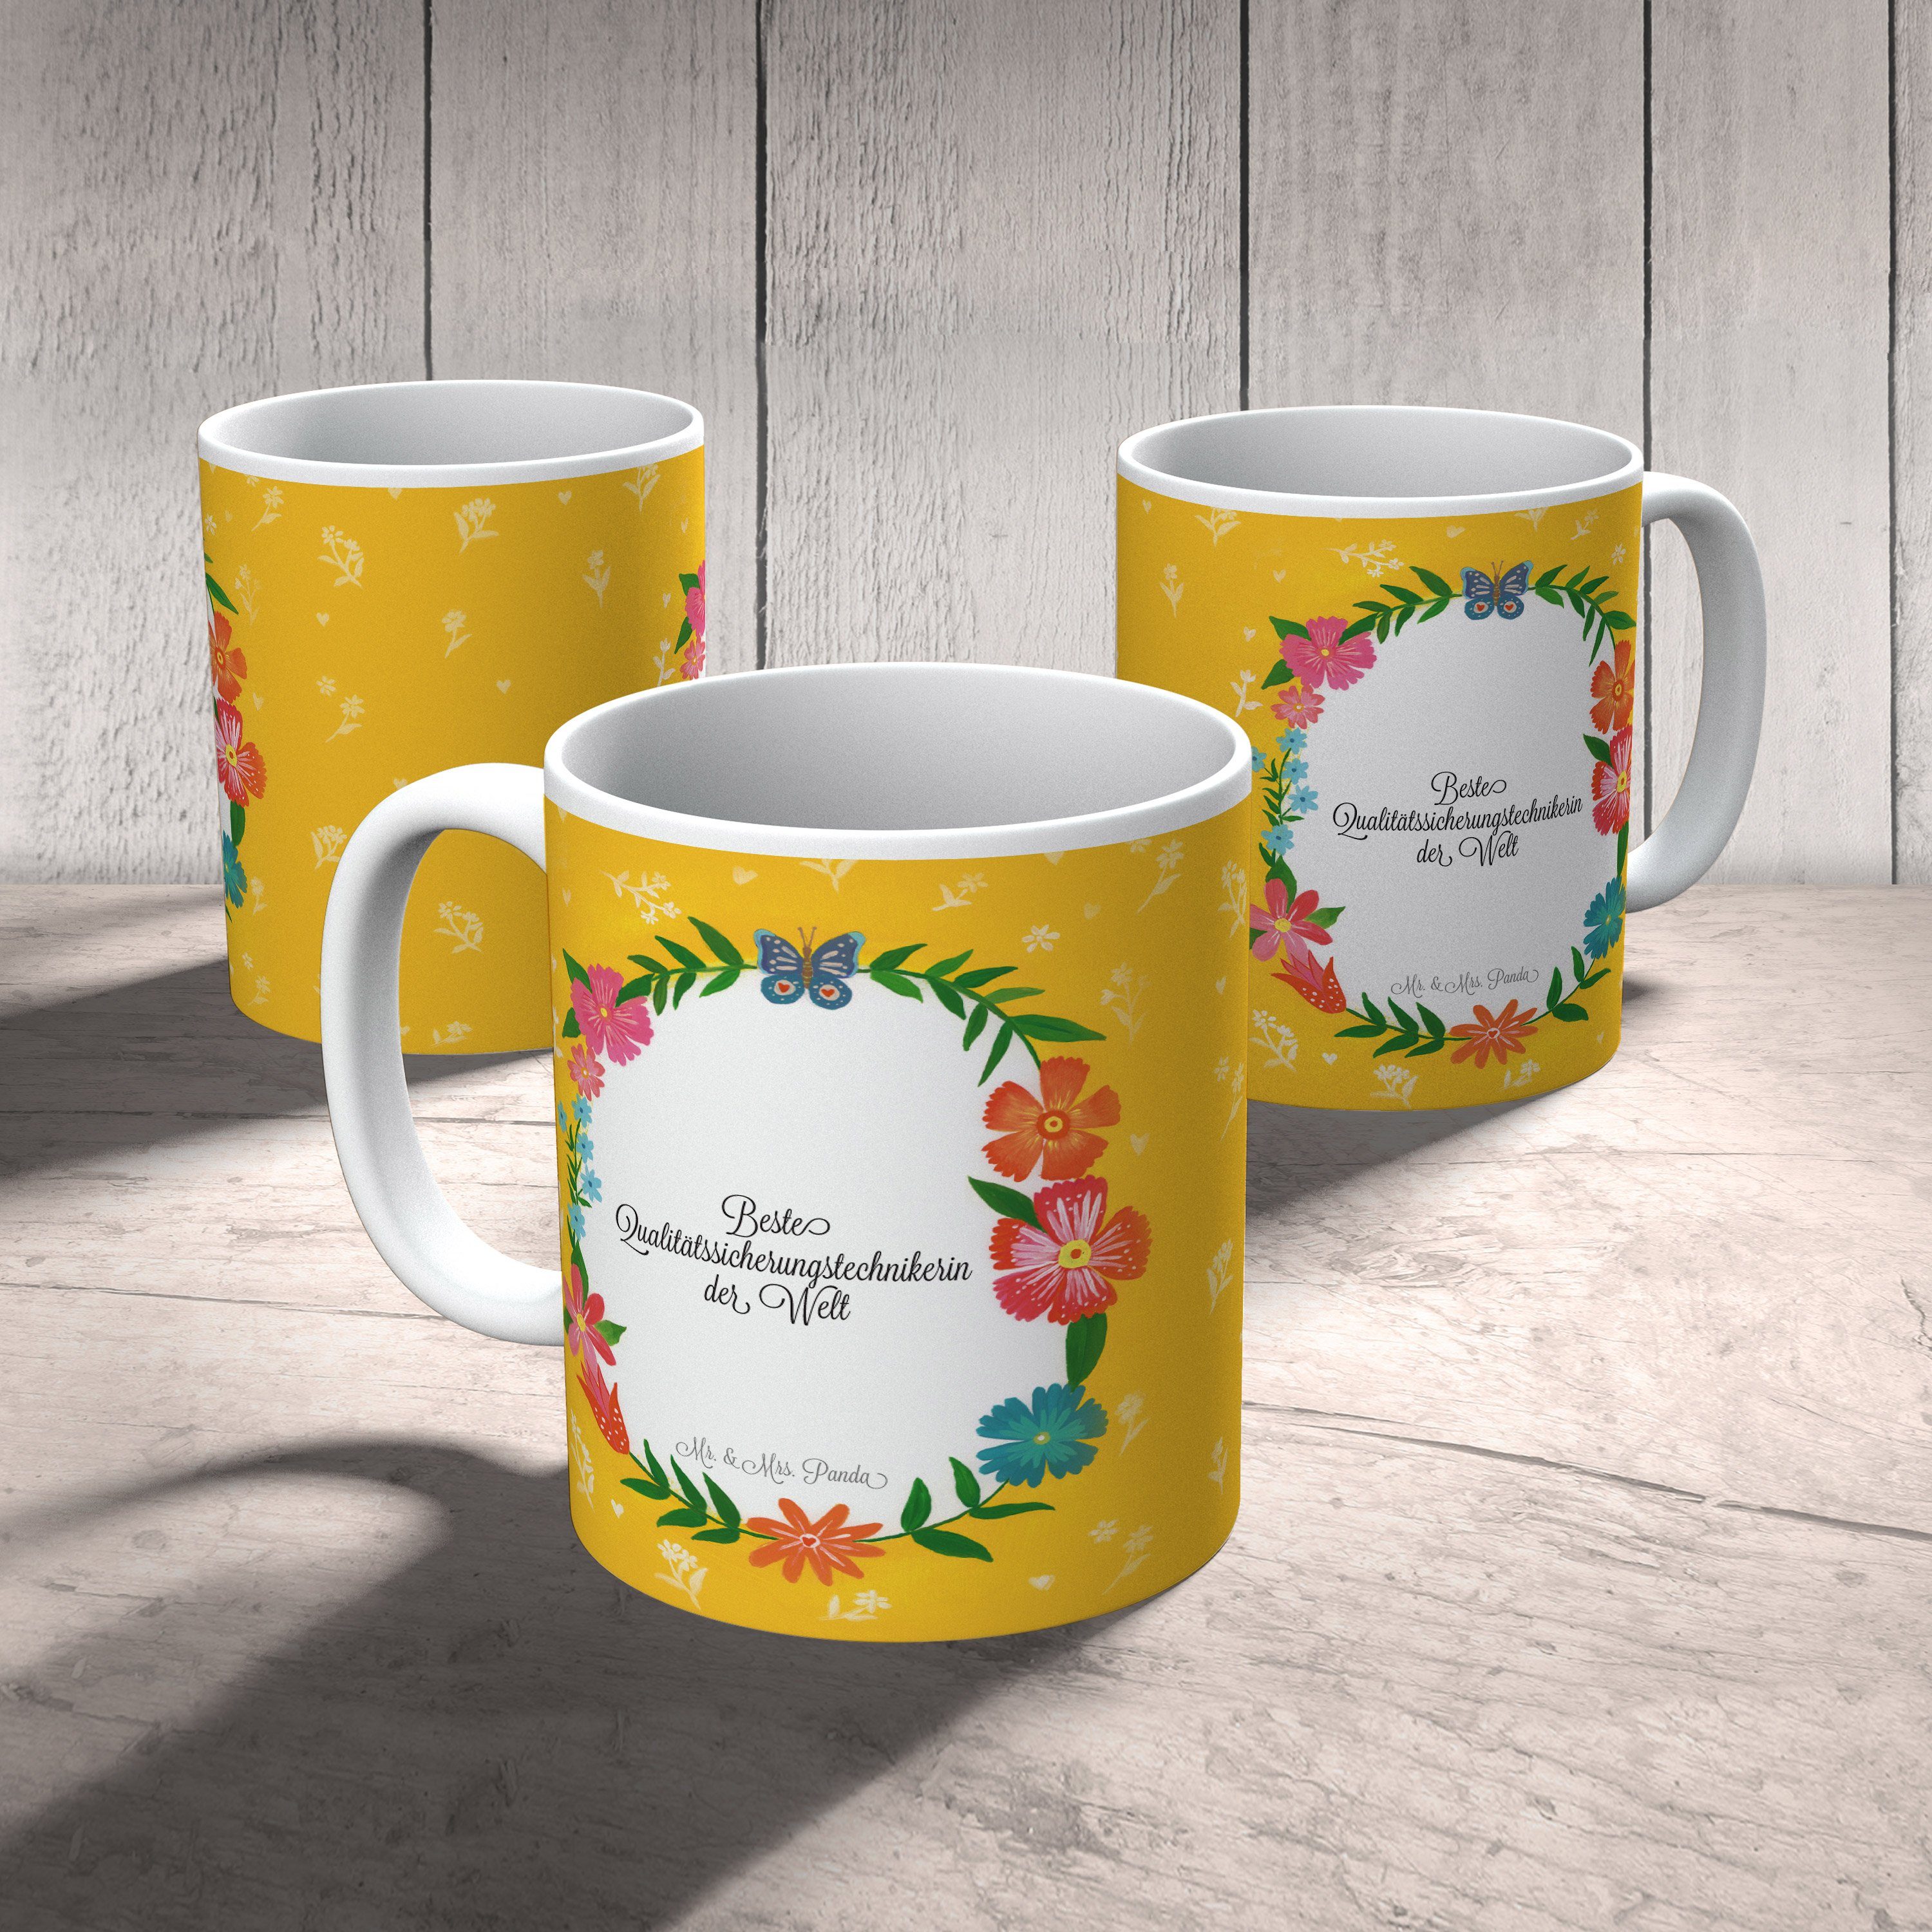 Mr. & Mrs. Panda Keramik Geschenk, D, - Qualitätssicherungstechnikerin Kaffeetasse, Tasse Ausbildung